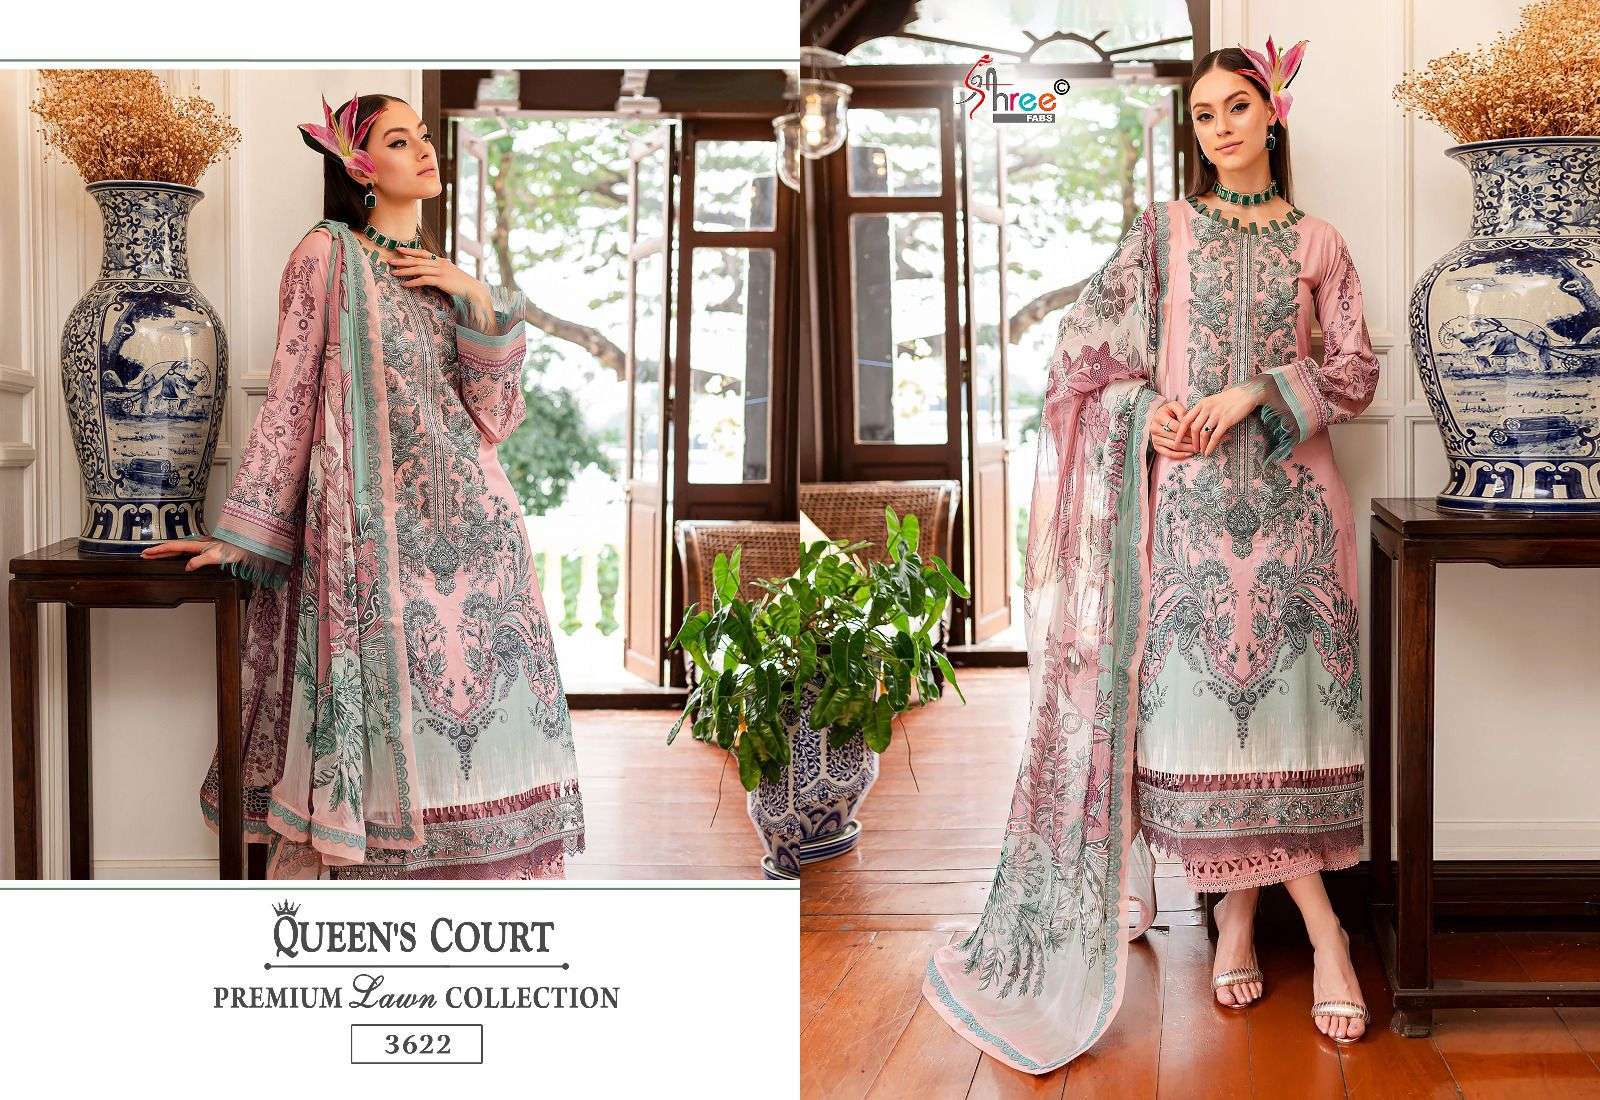 shree fabs queens court premium lawn collection cotton festive look salwar sut with cotton dupatta catalog